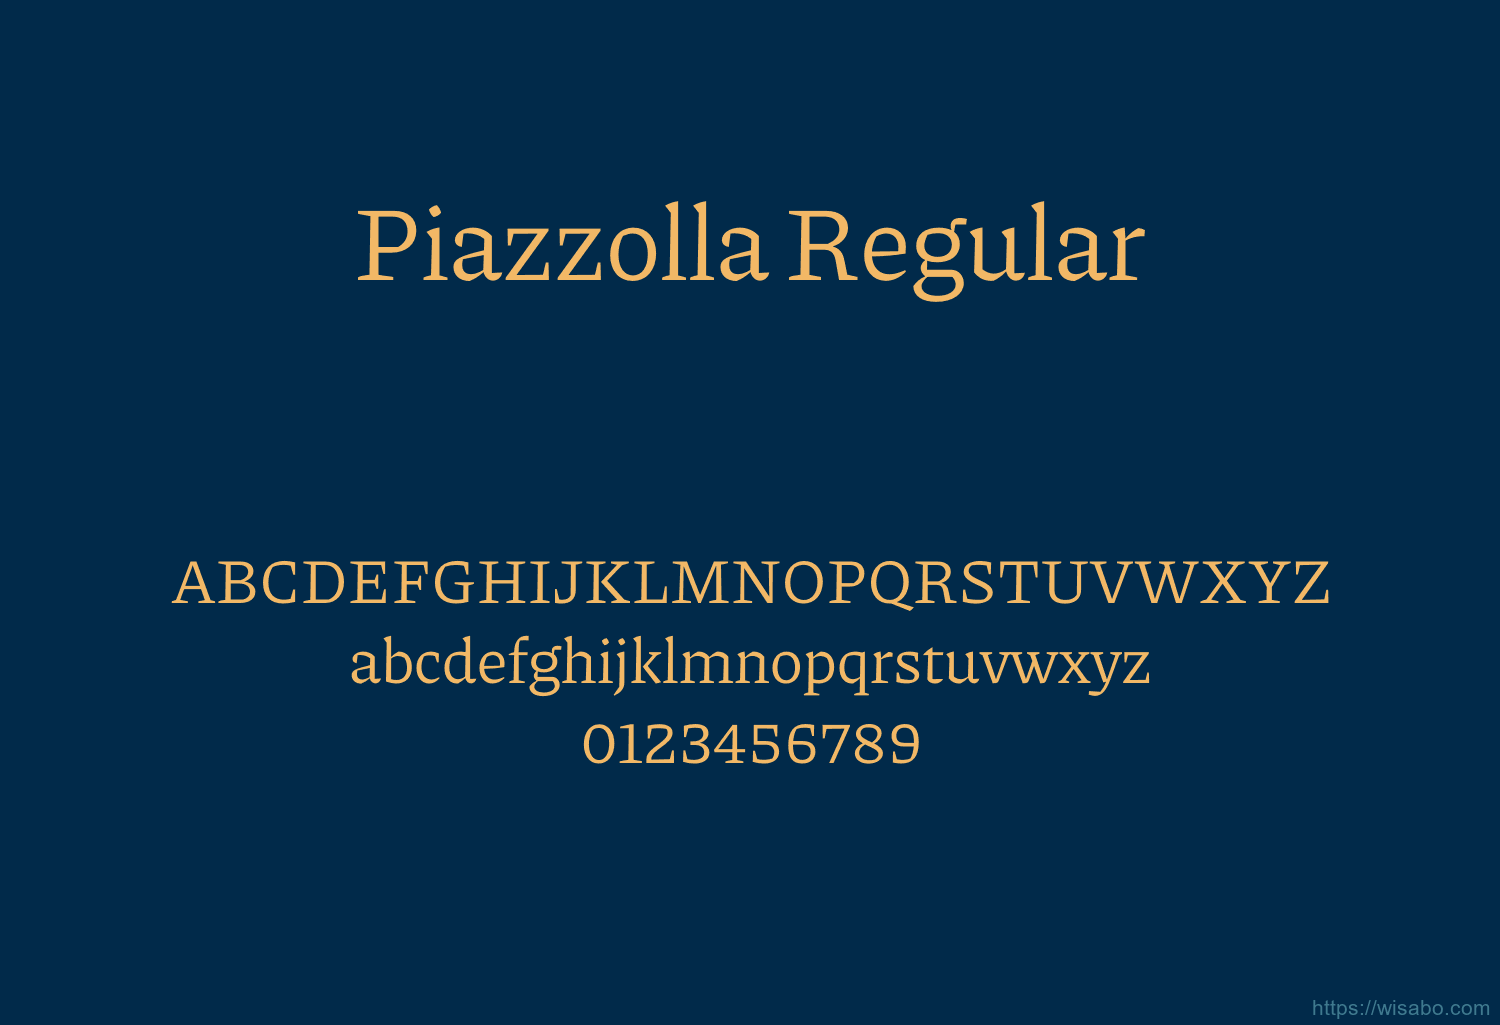 Piazzolla Regular